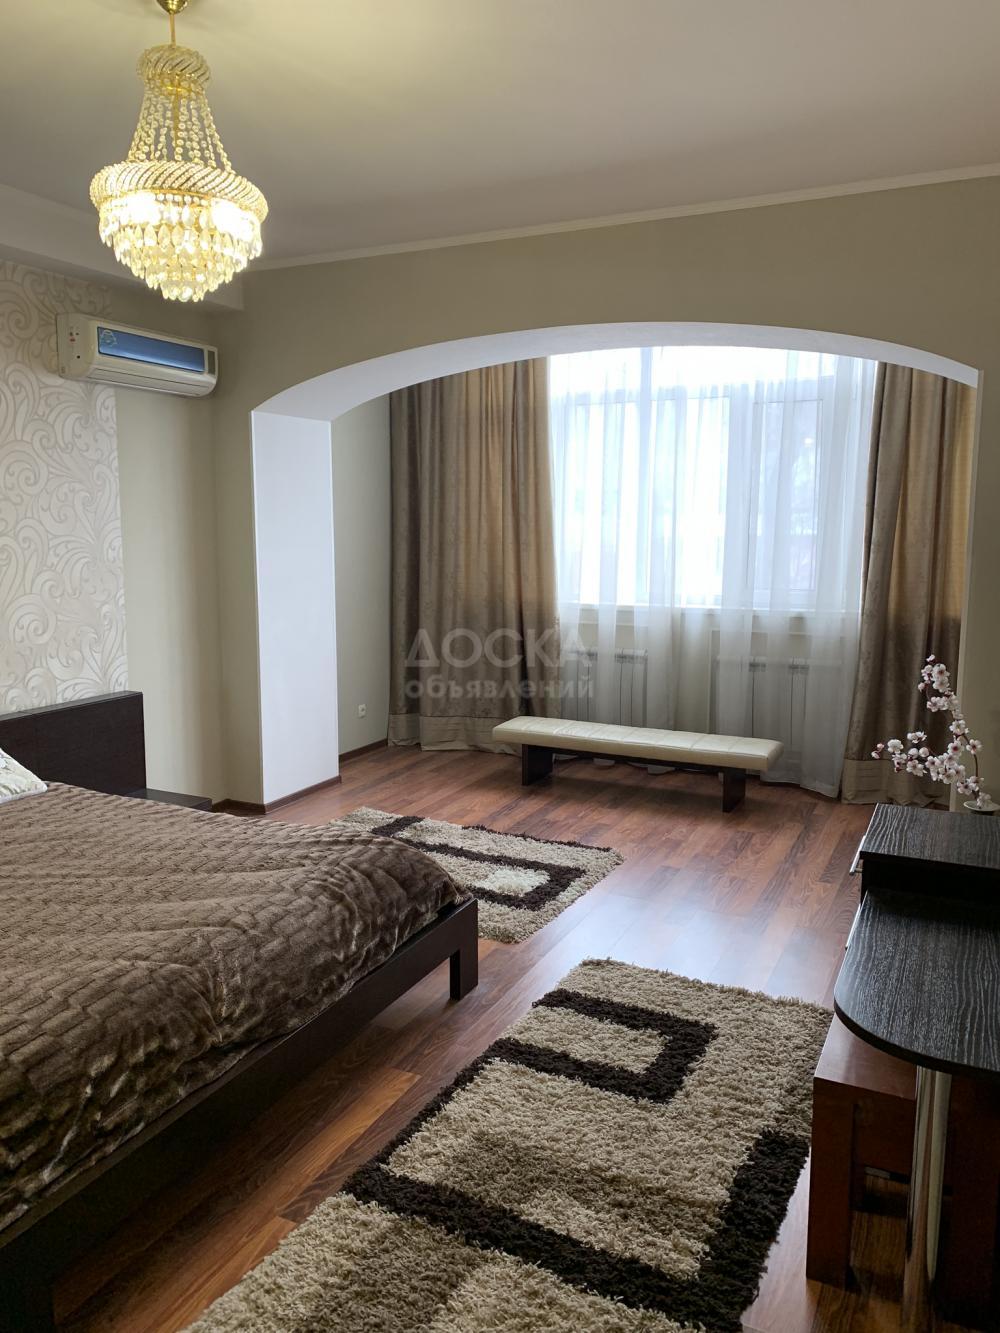 Сдаю 3-комнатную квартиру, 120кв. м., этаж - 2/10, Раззакова/Боконбаева.